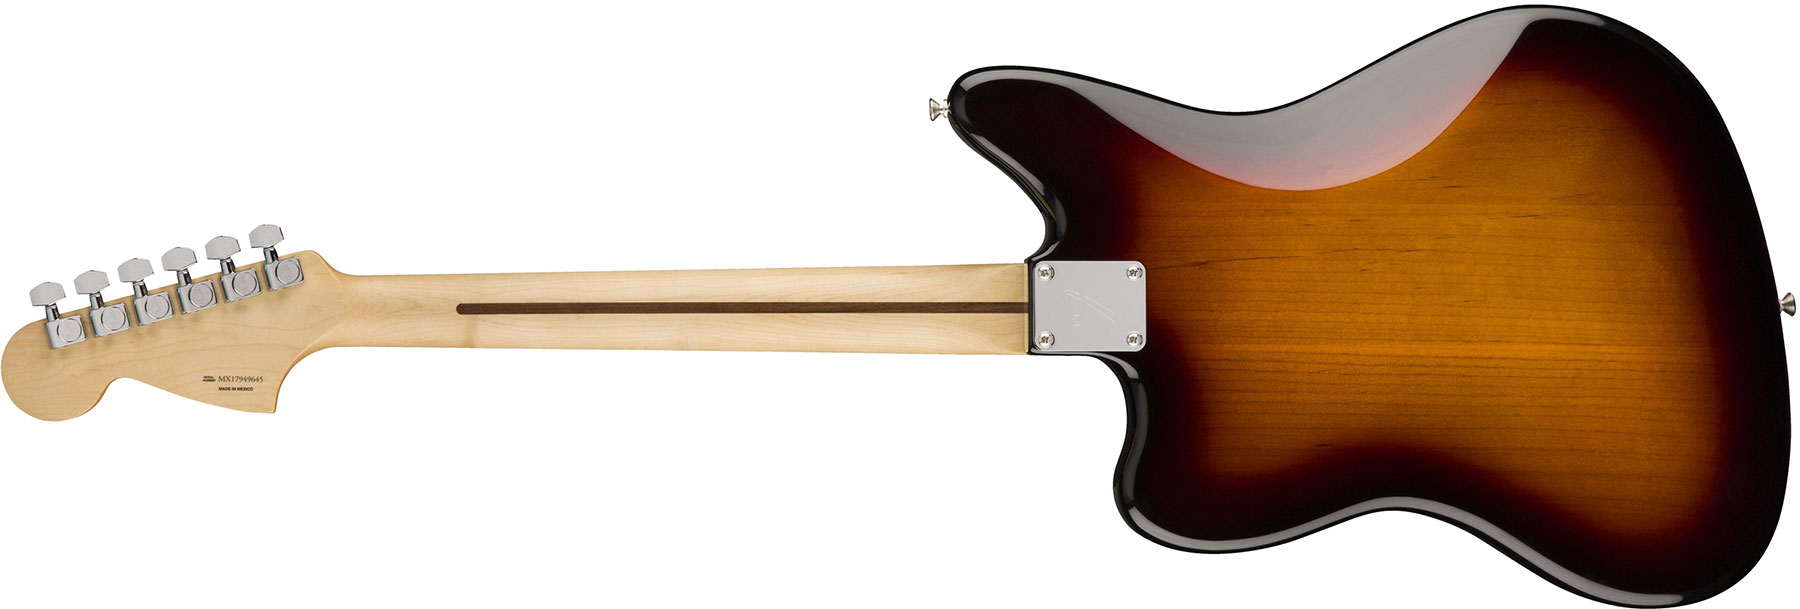 Fender Jaguar Player Mex Hs Pf - 3-color Sunburst - Guitarra electrica retro rock - Variation 1